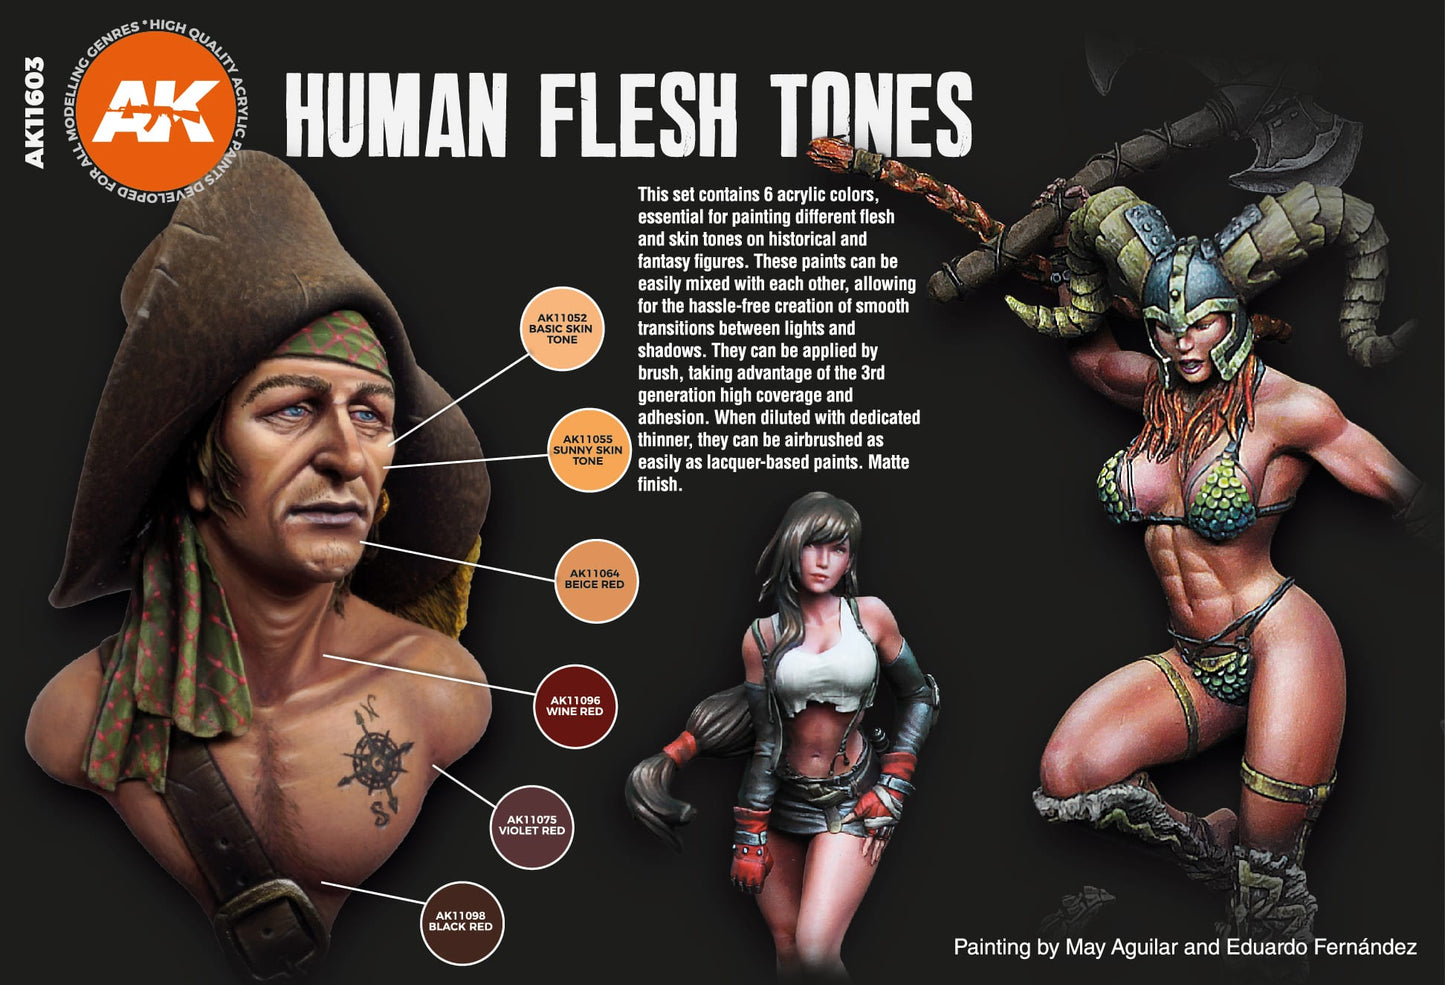 Human Flesh Tones